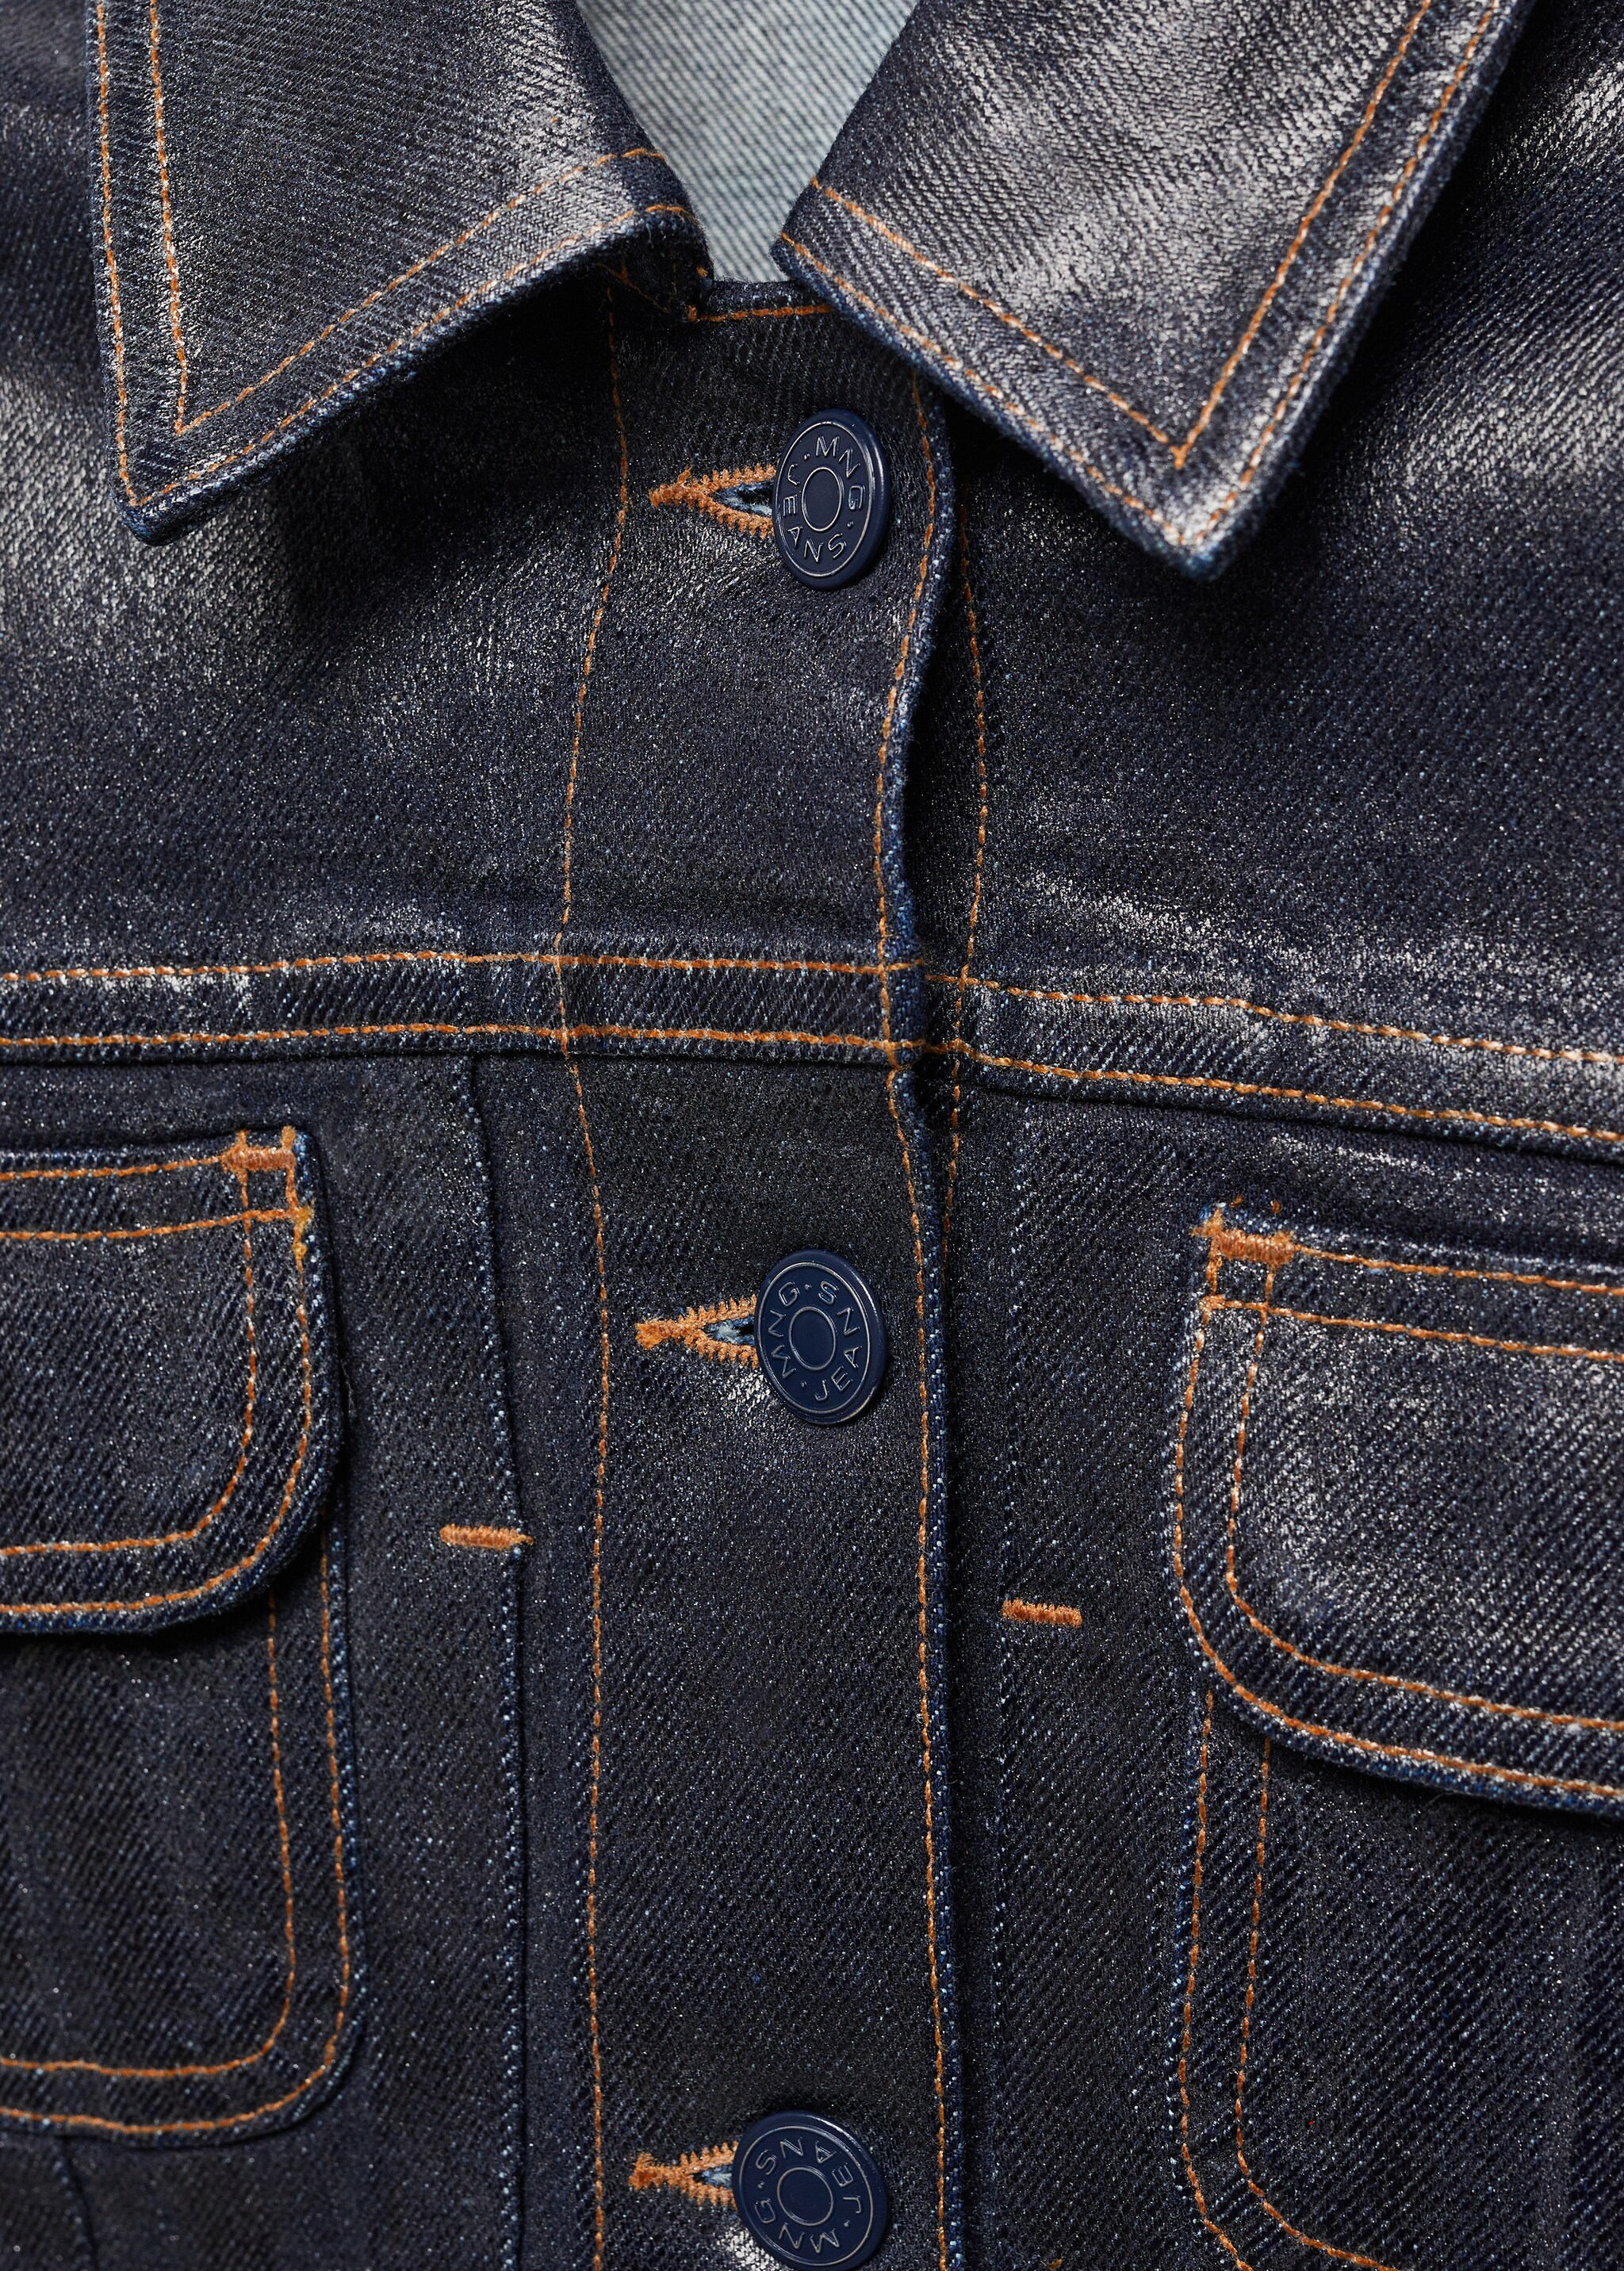 Foil structured denim jacket - Details of the article 8